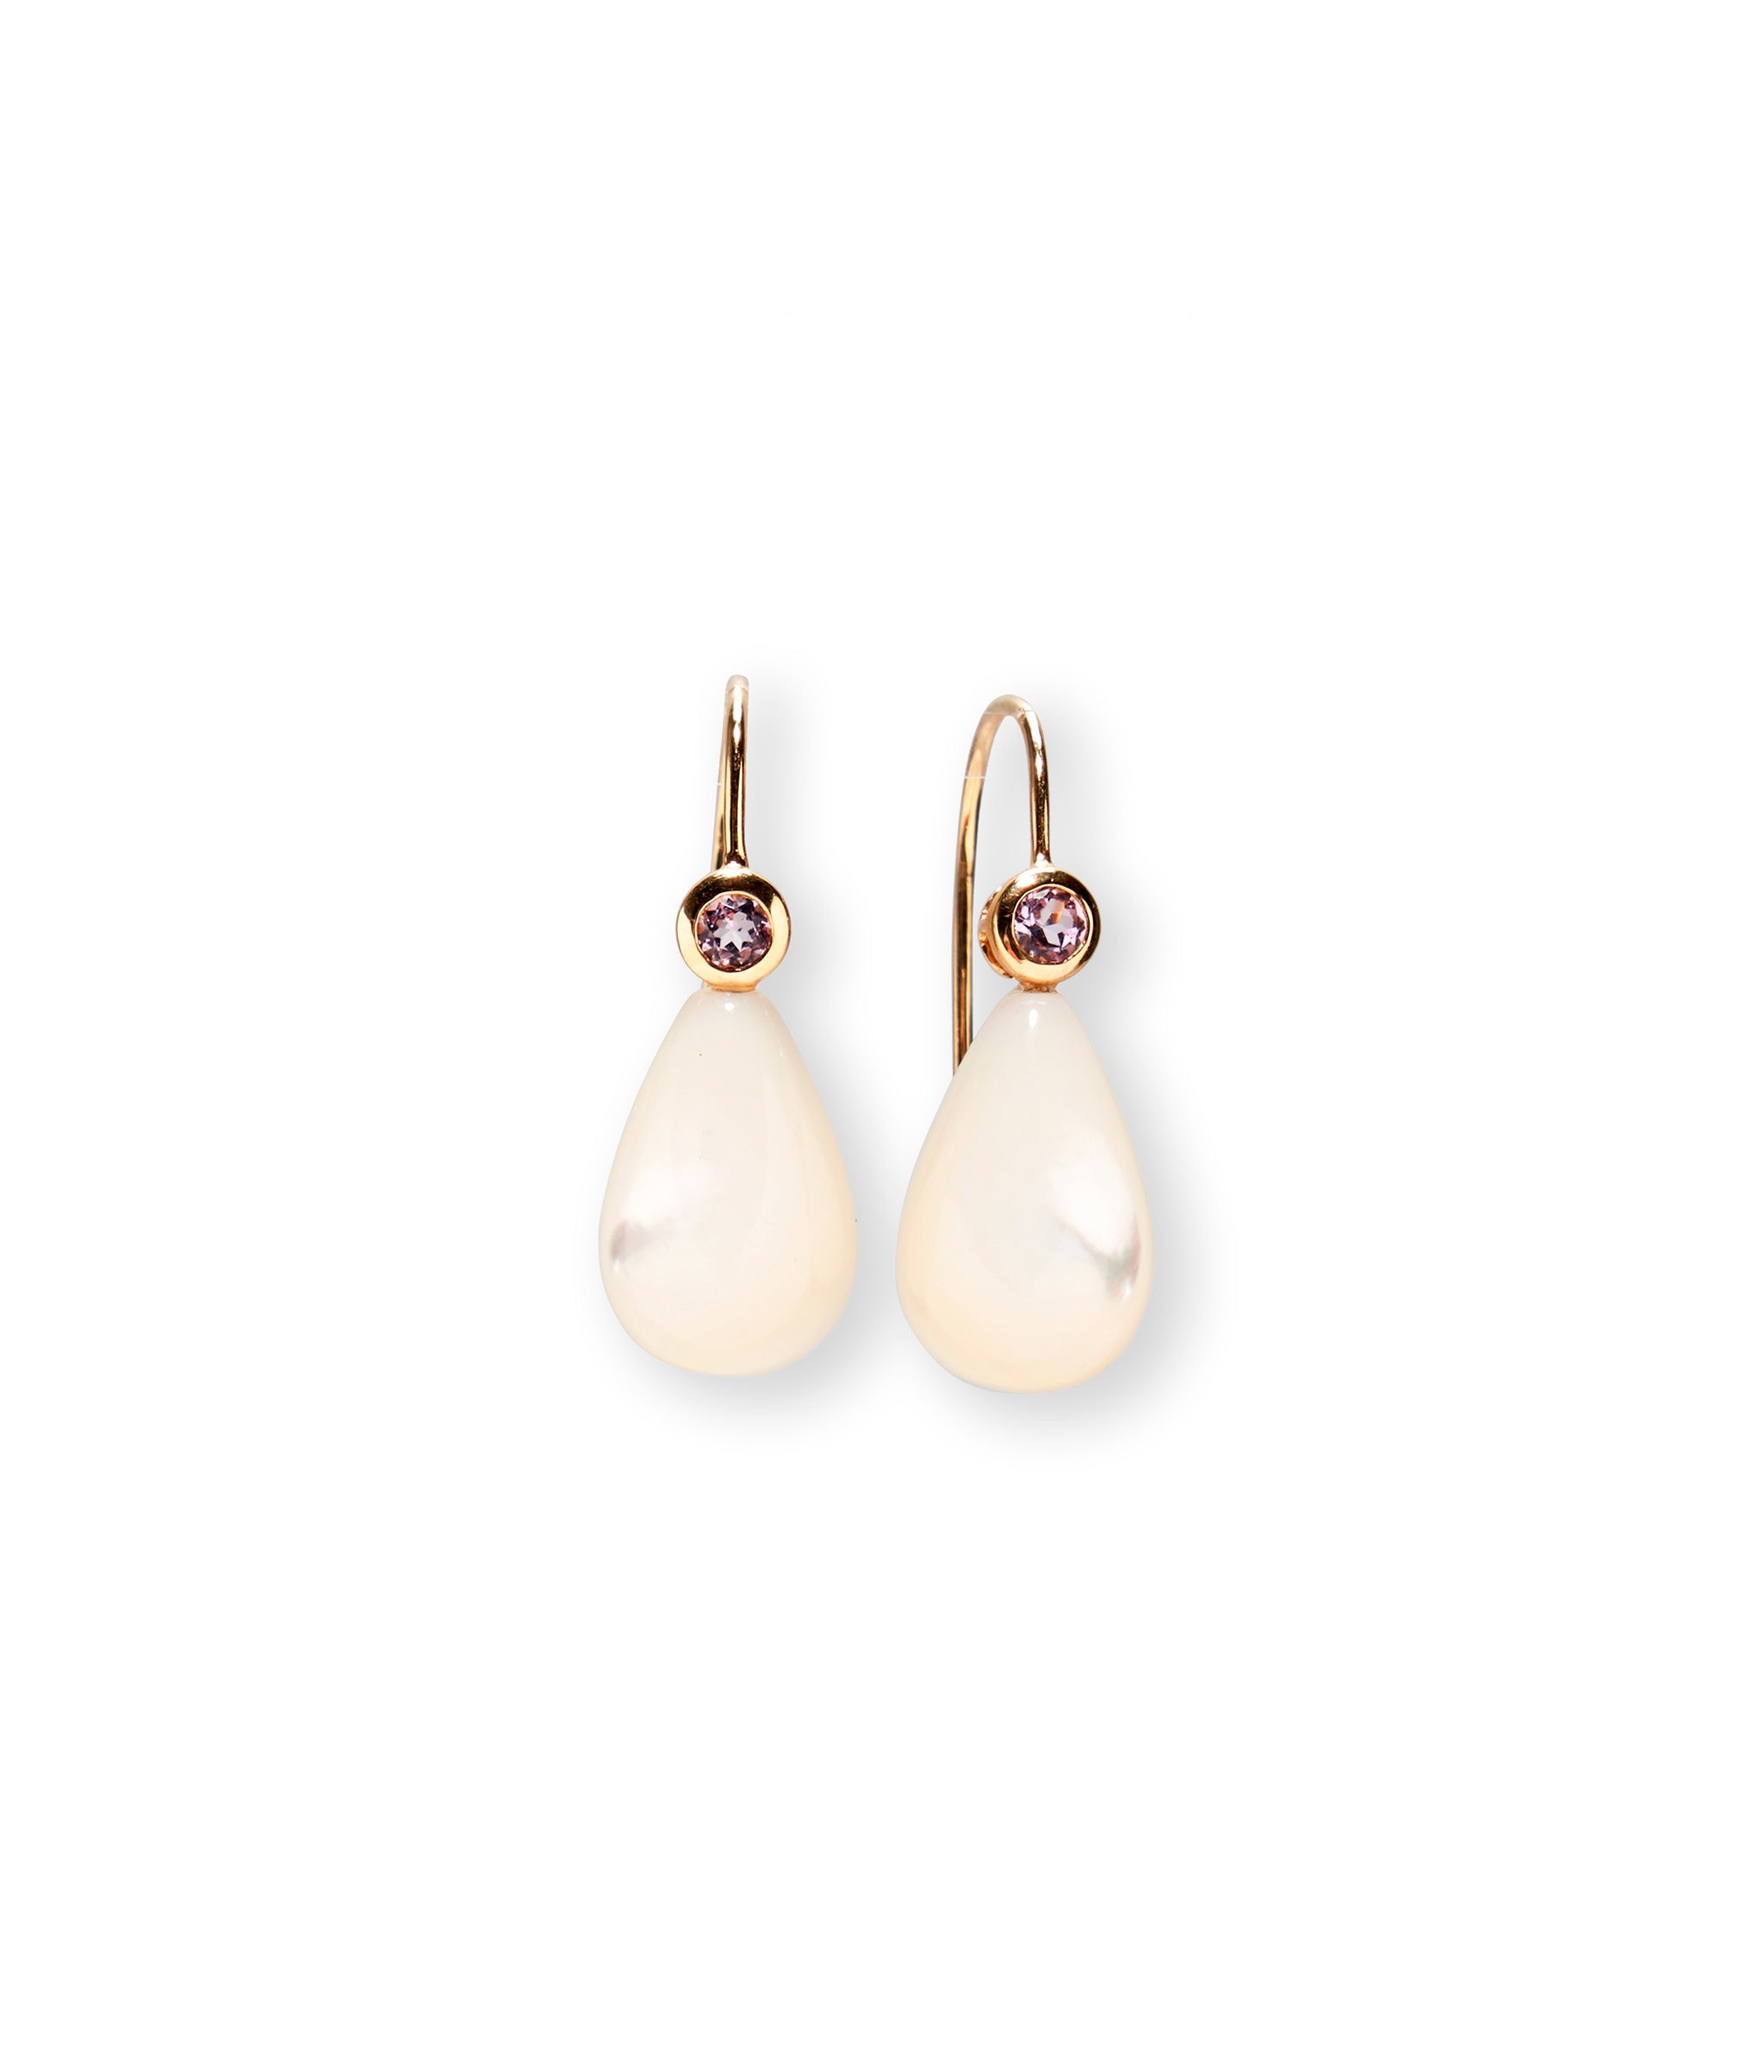 14k Gold Drop Earrings in Pink Amethyst & Pearl